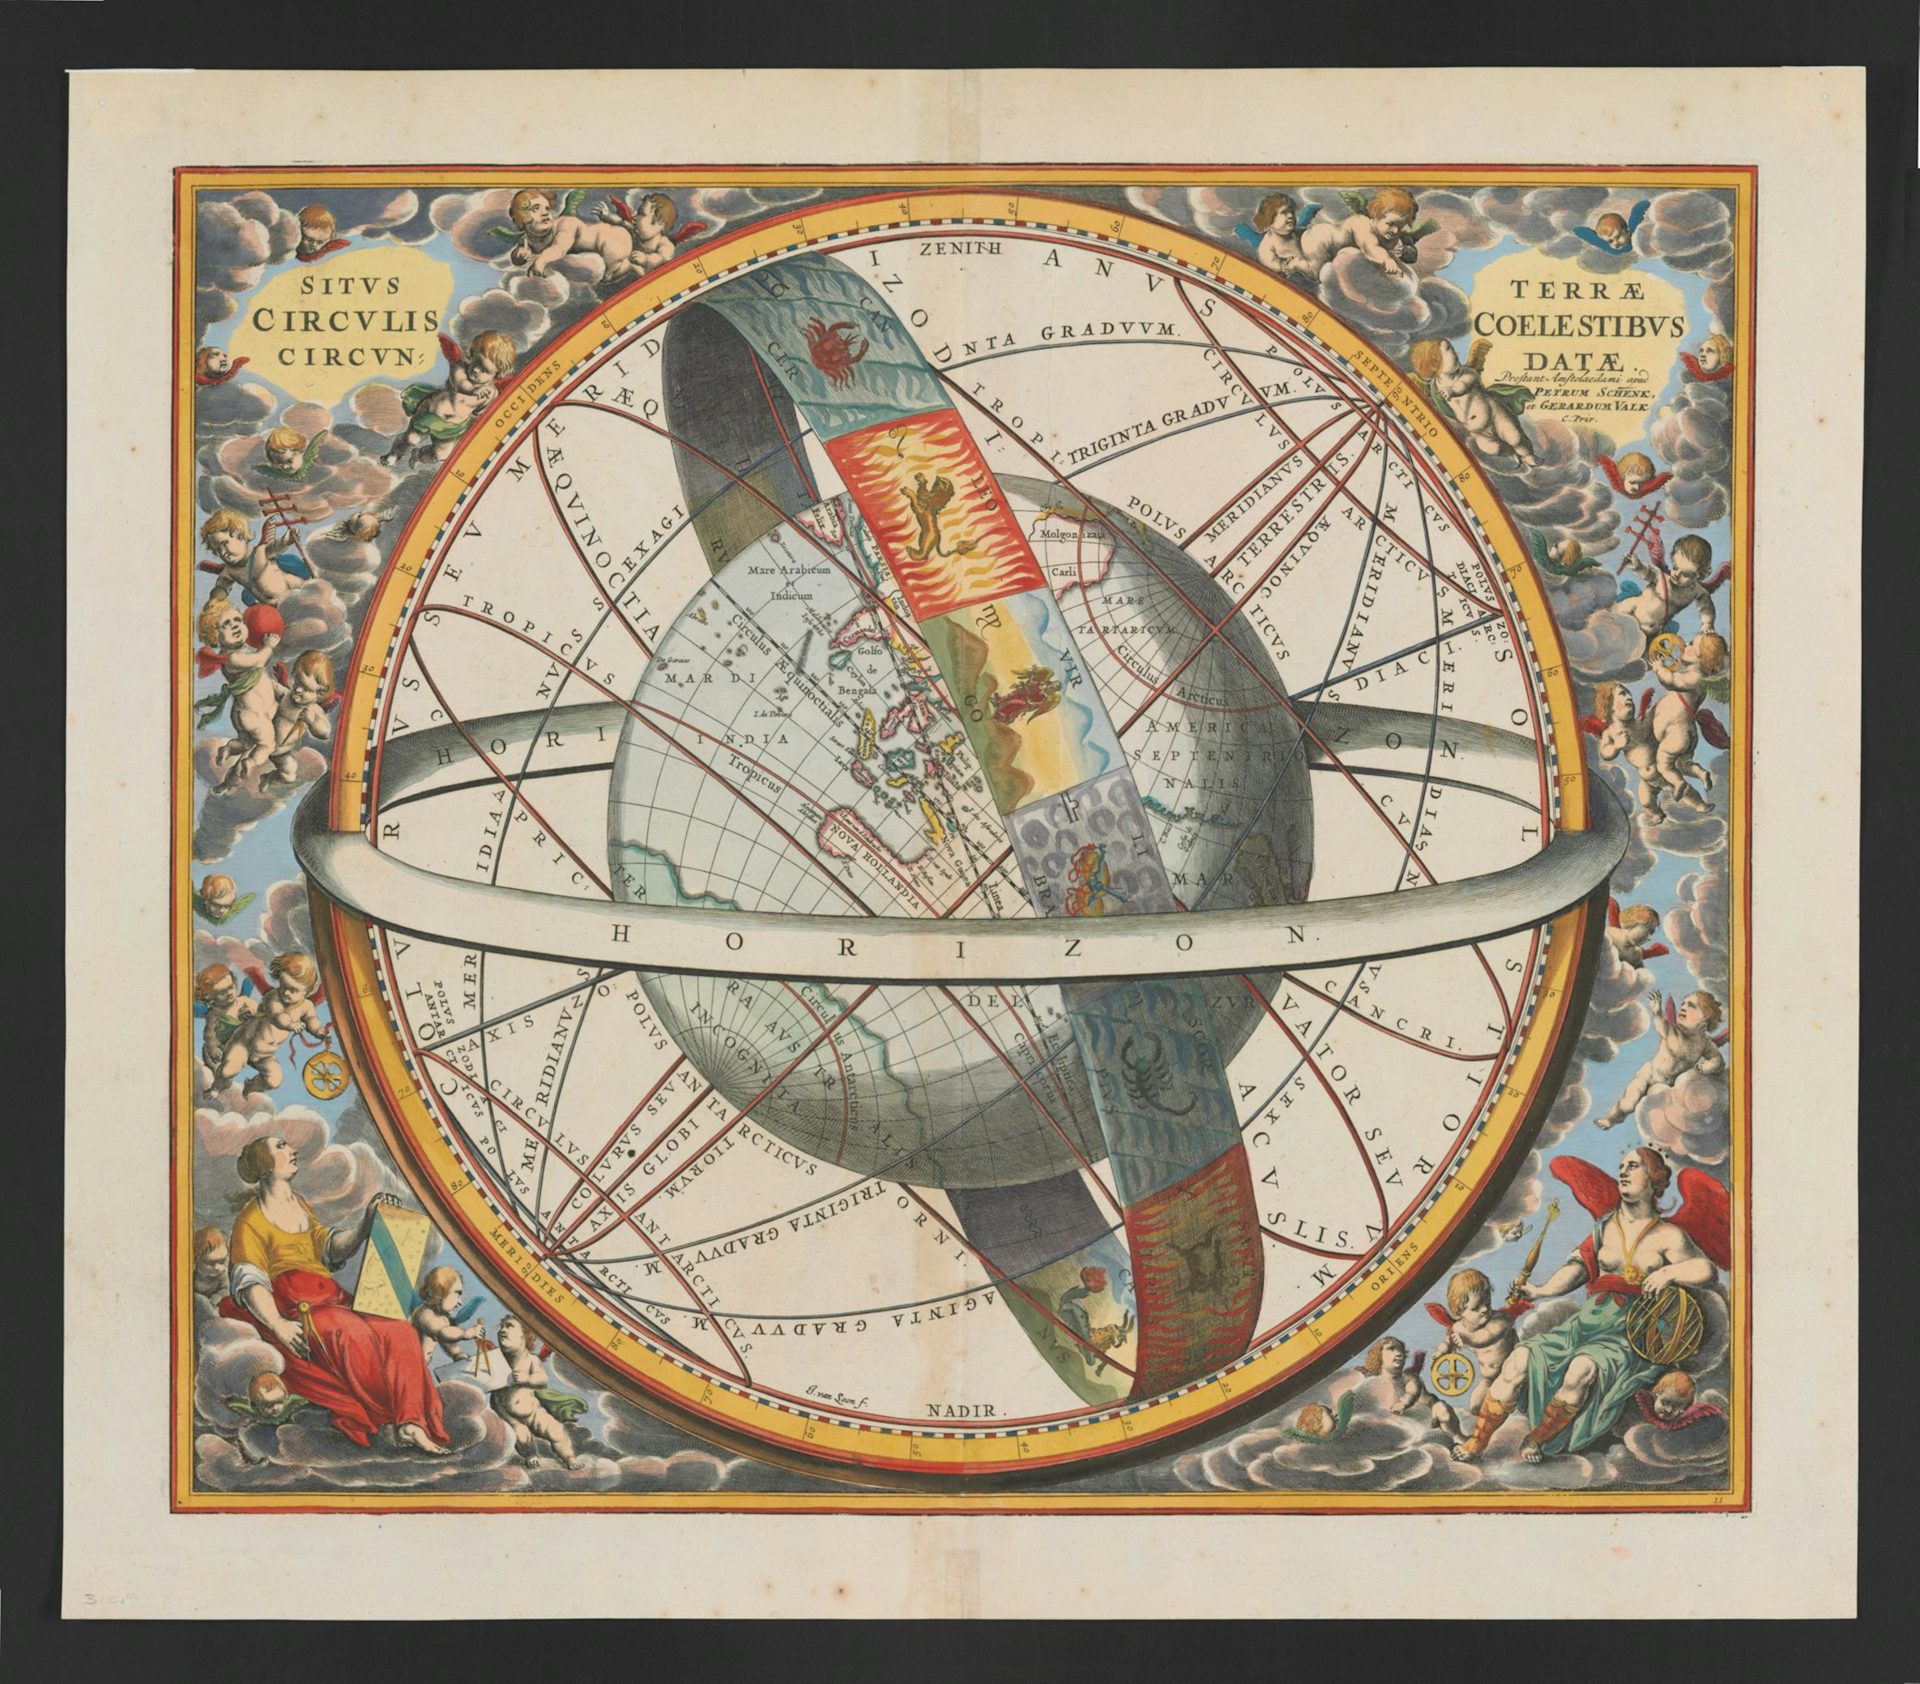 The Celestial Atlas of Andreas Cellarius in 1660